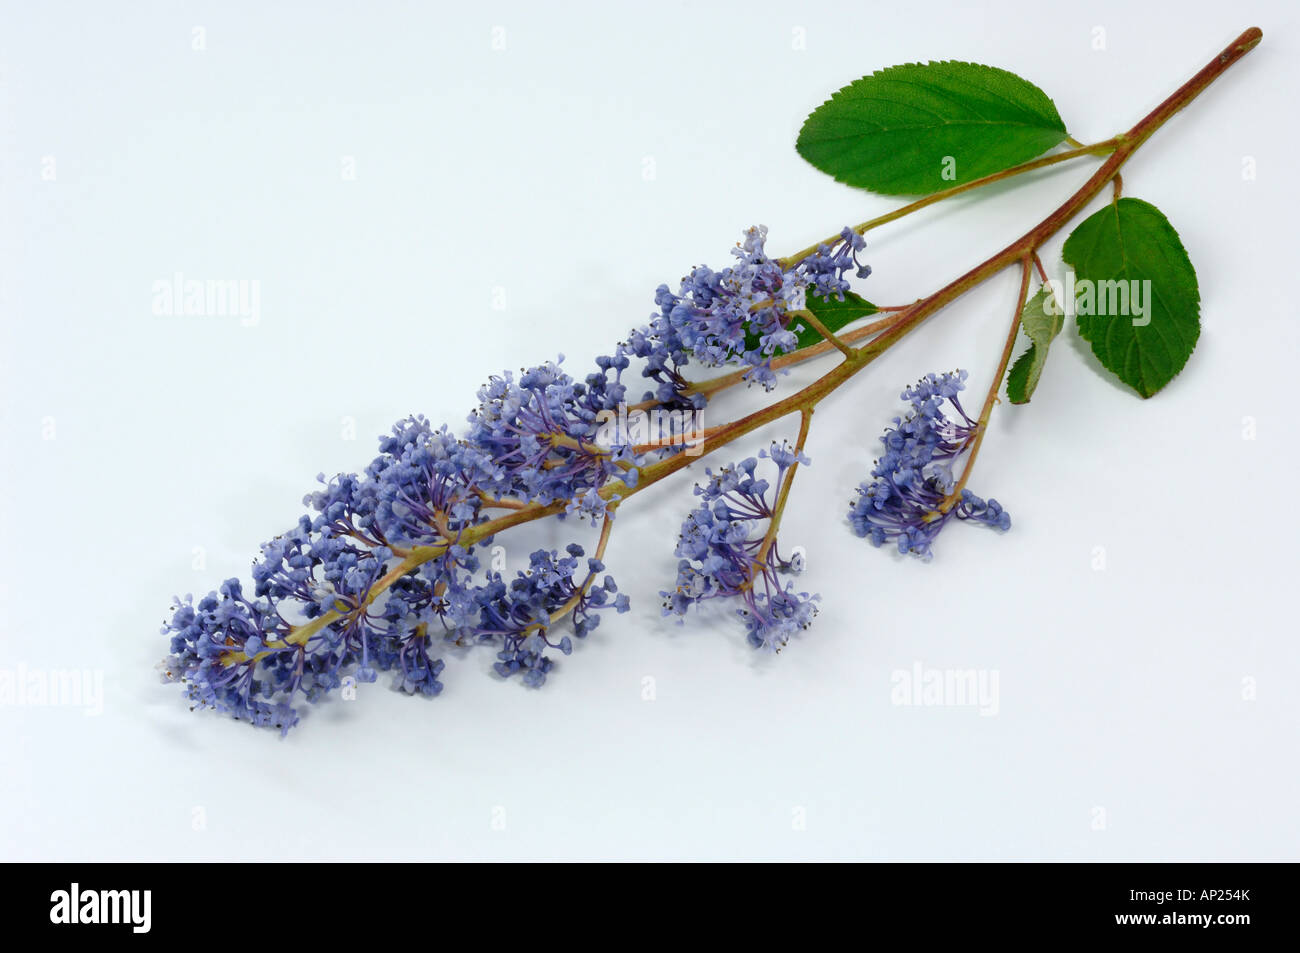 California Lilac (Ceanothus x delilianus) var. Gloire de Versaille flowering twig studio picture Stock Photo